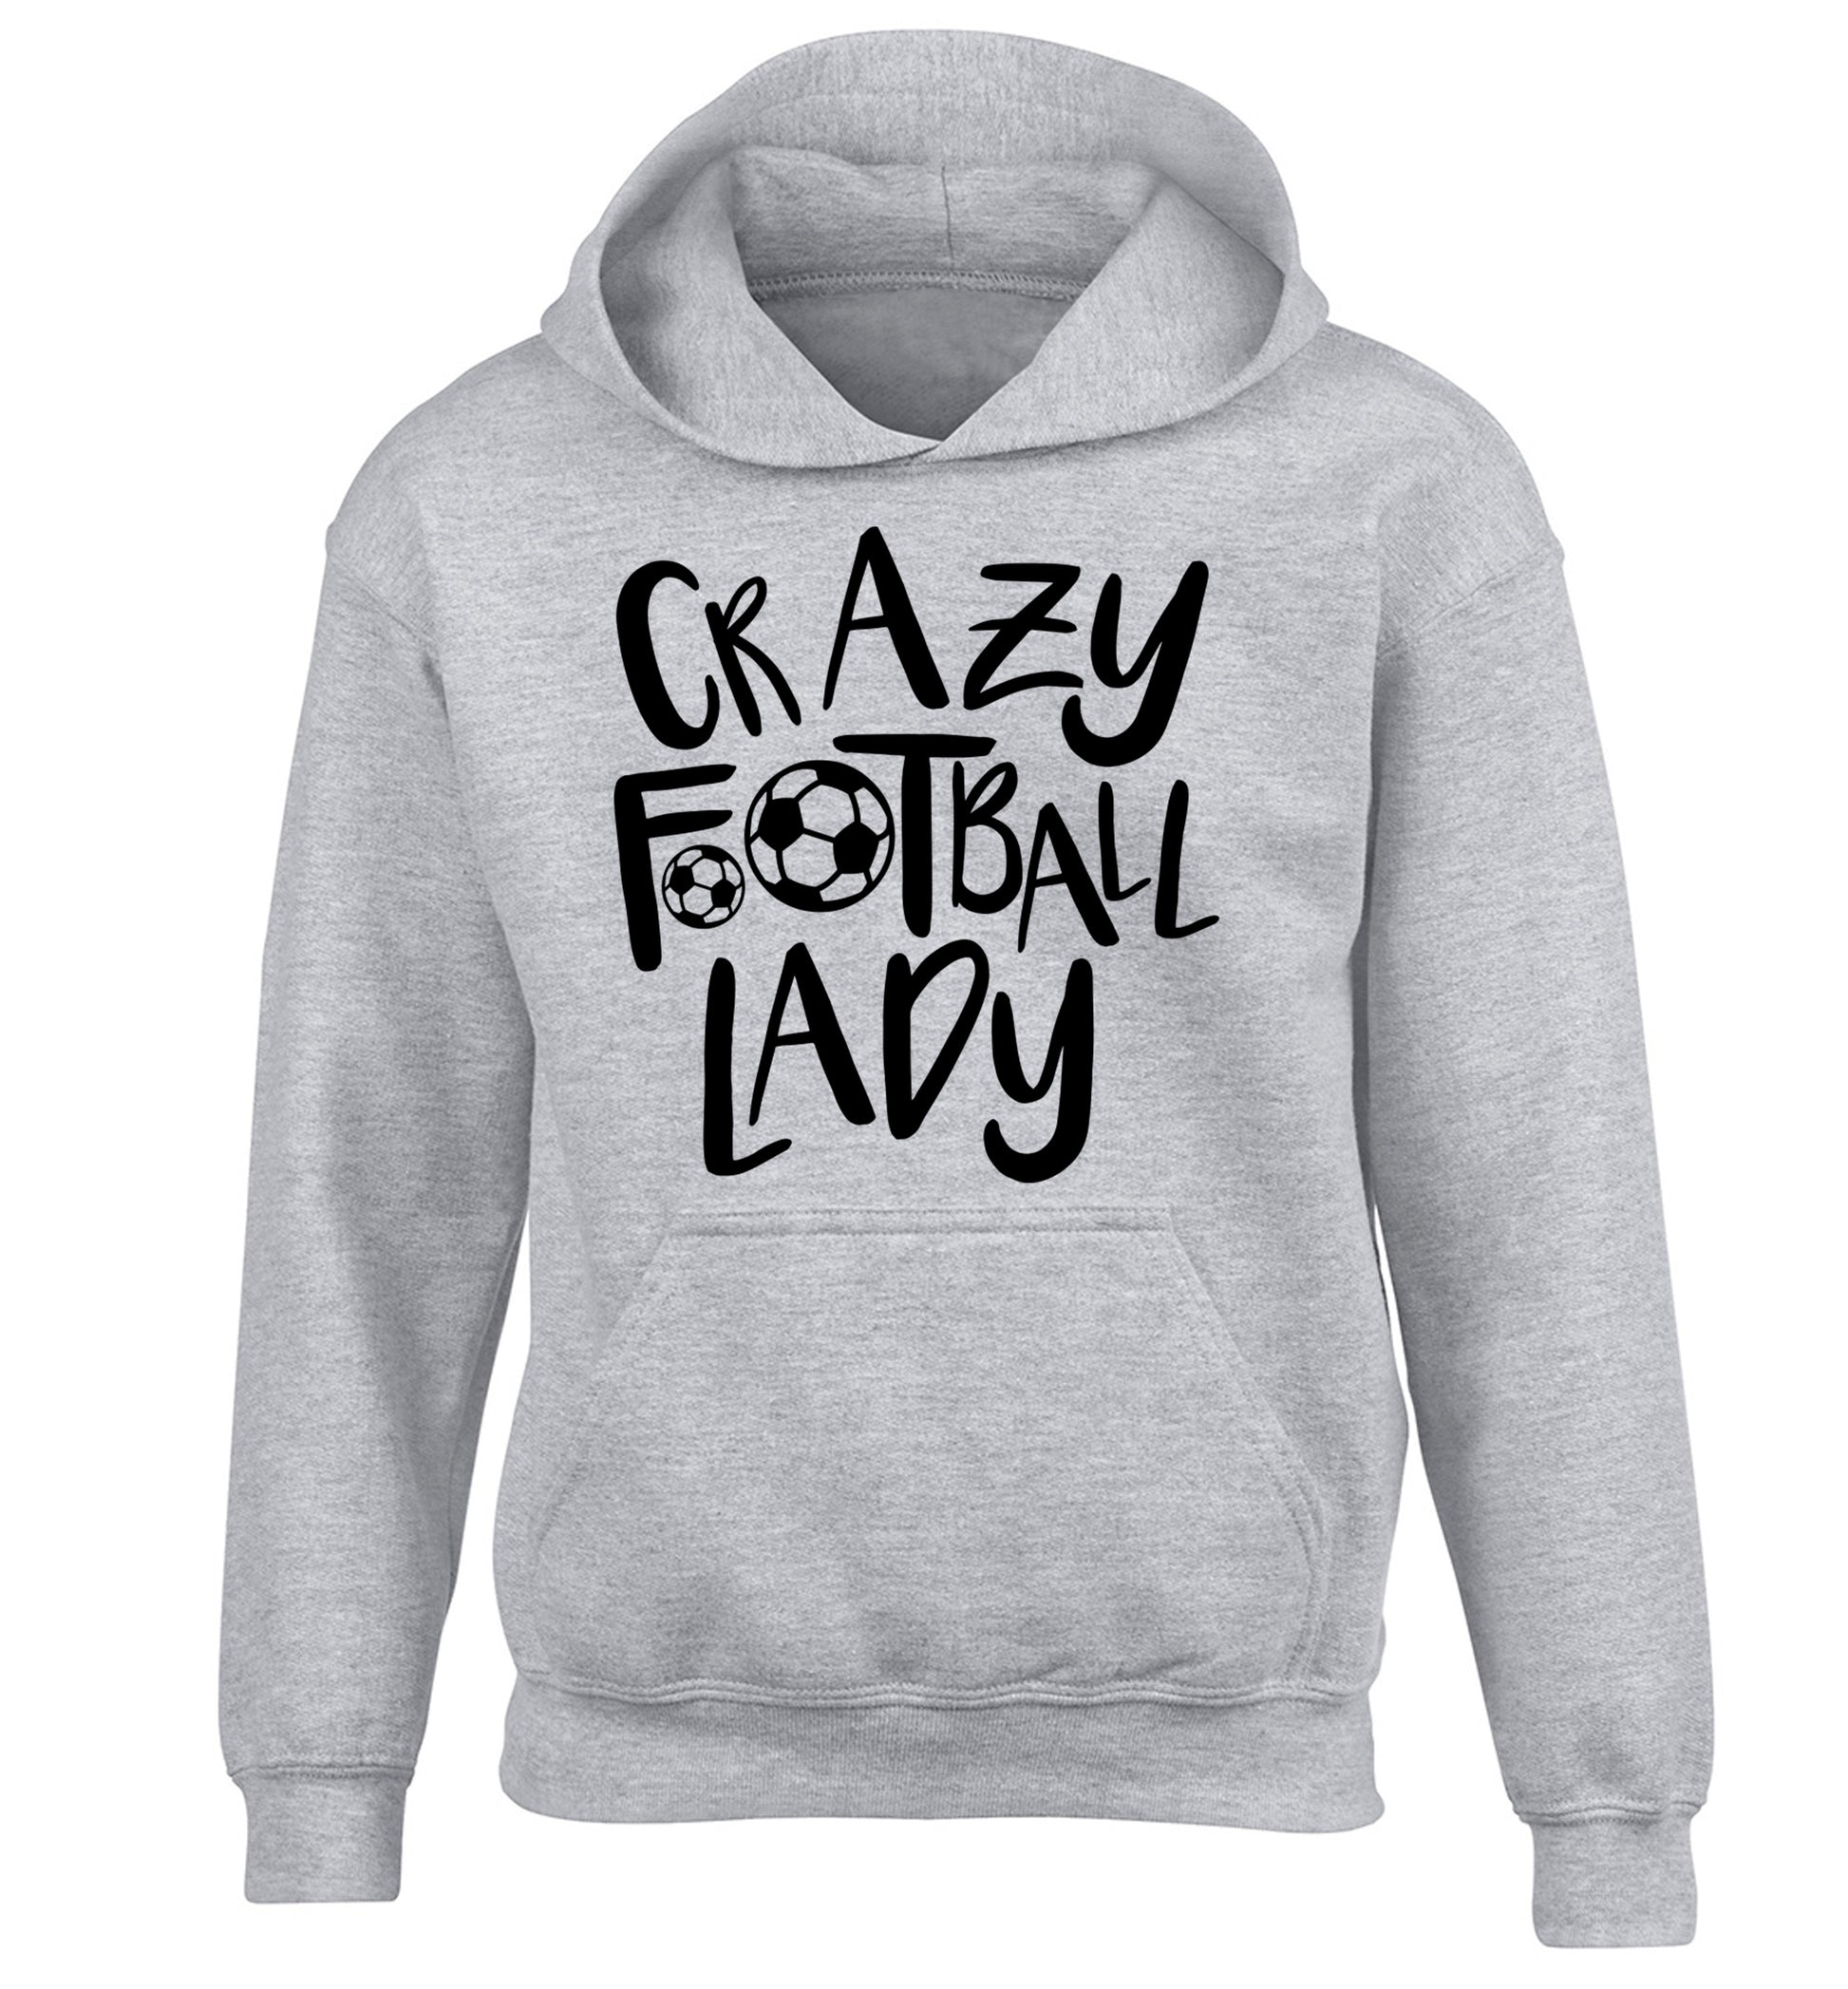 Crazy football lady children's grey hoodie 12-14 Years